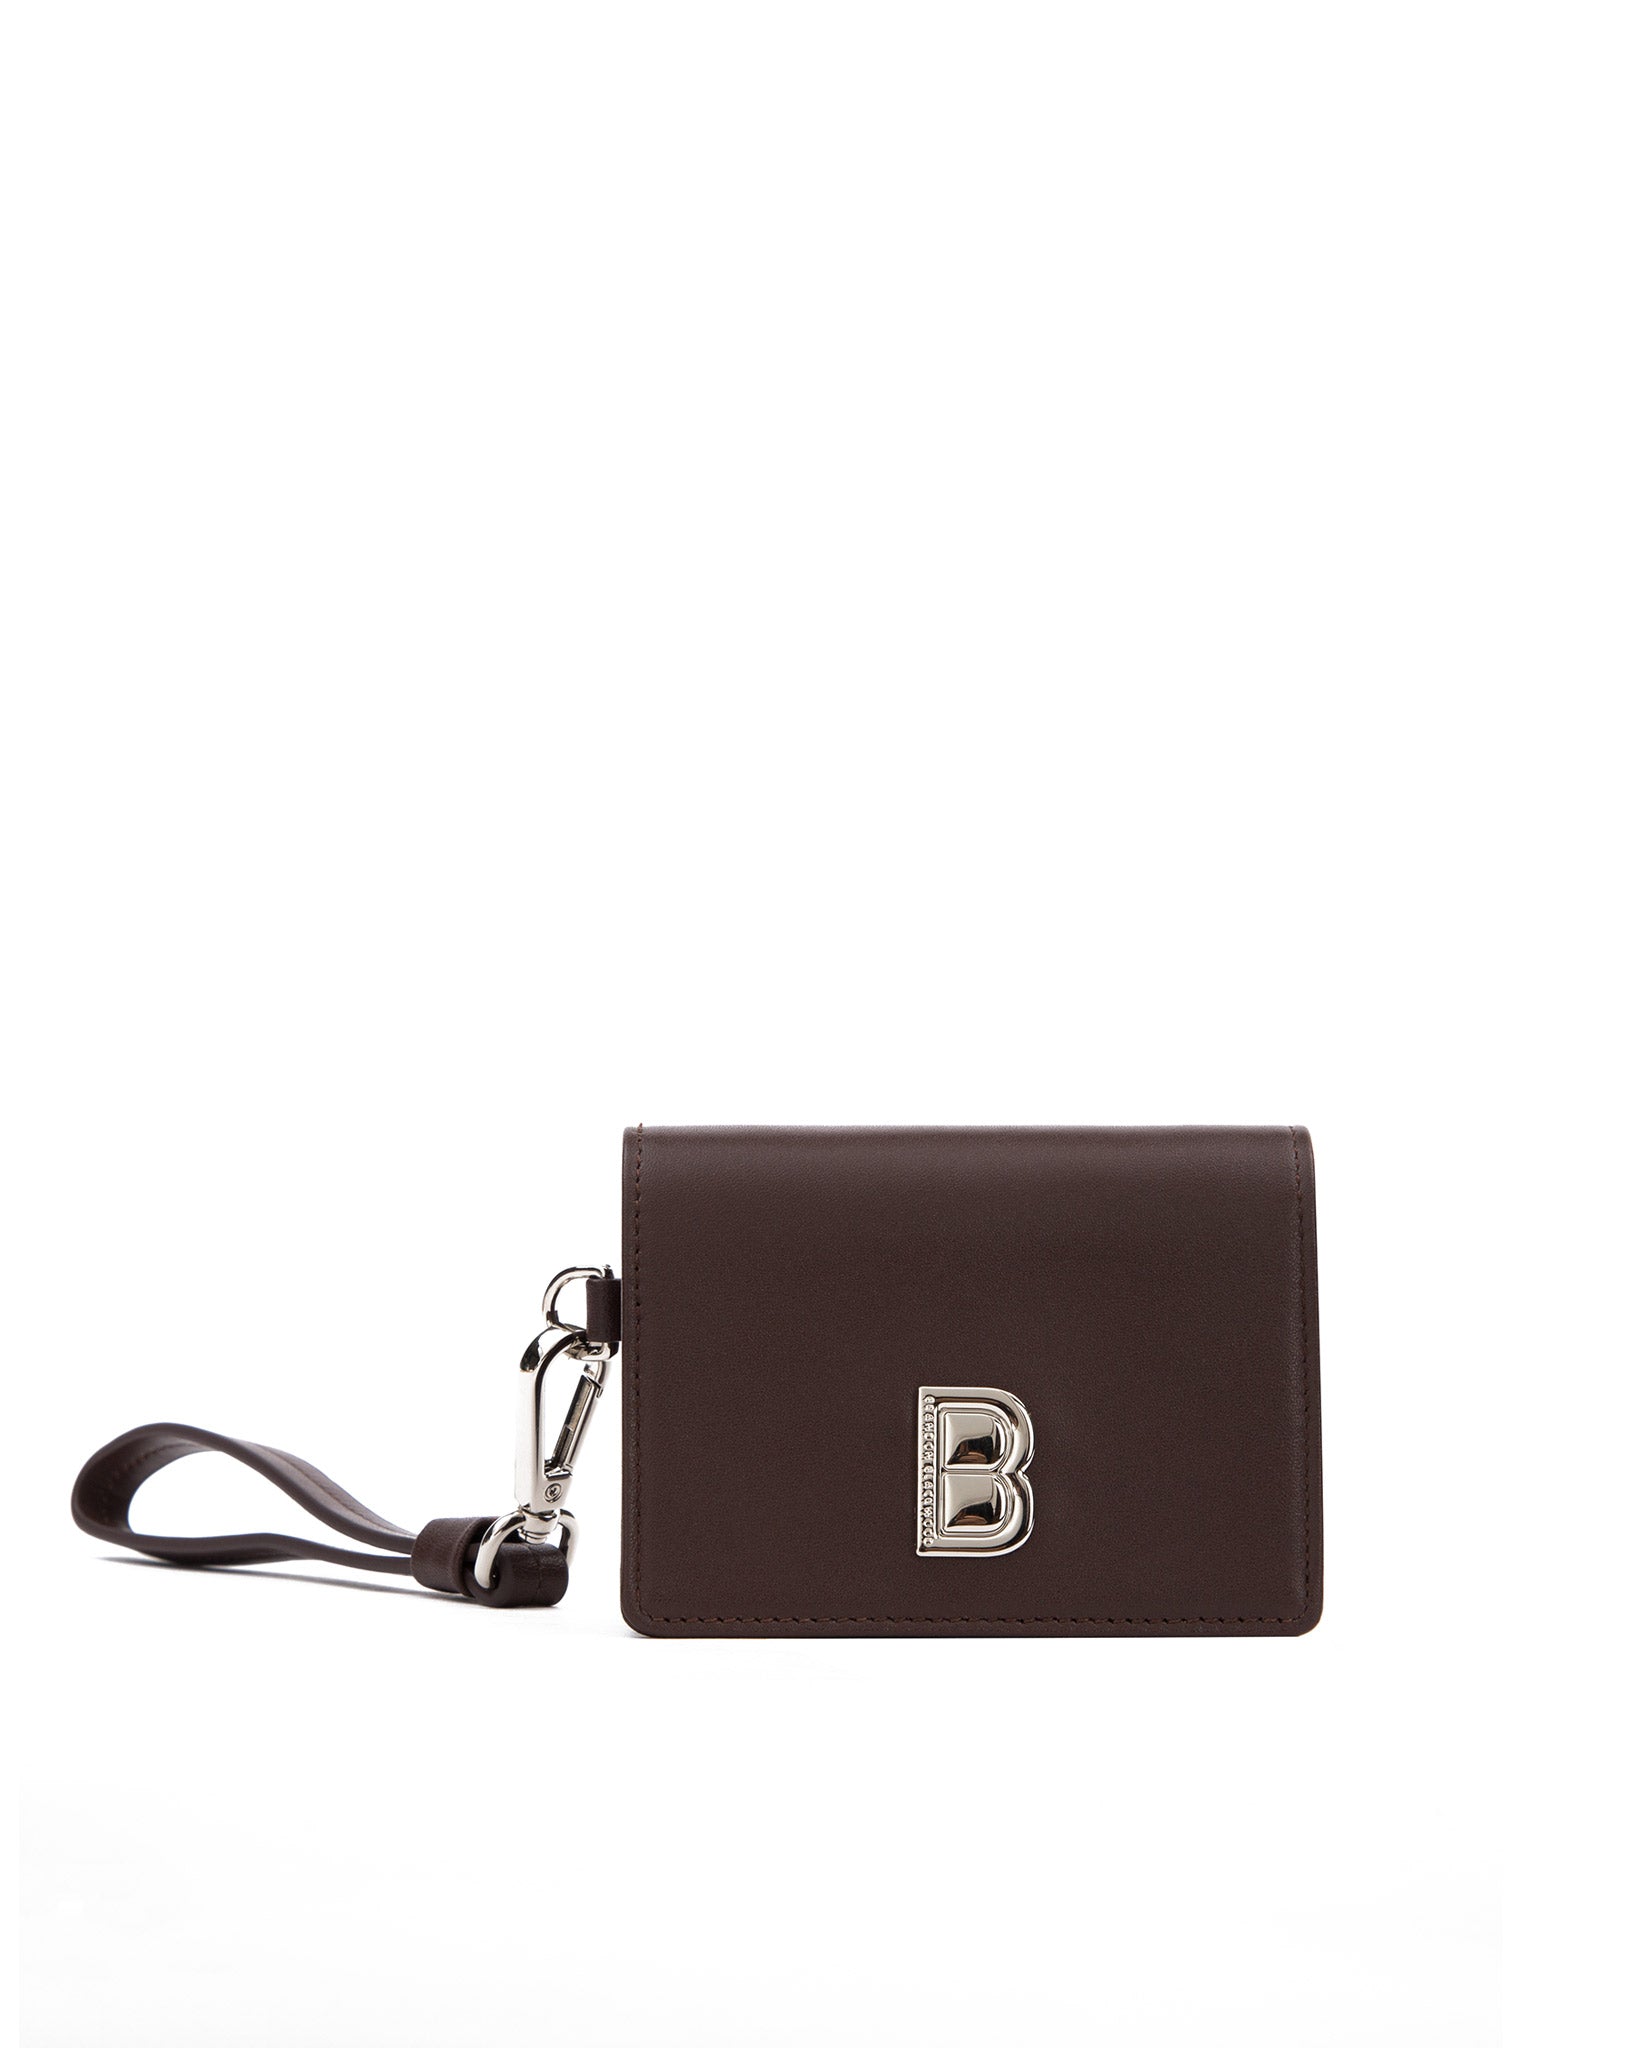 Brandon Blackwood New York - Accordion Card Case - Brown Leather